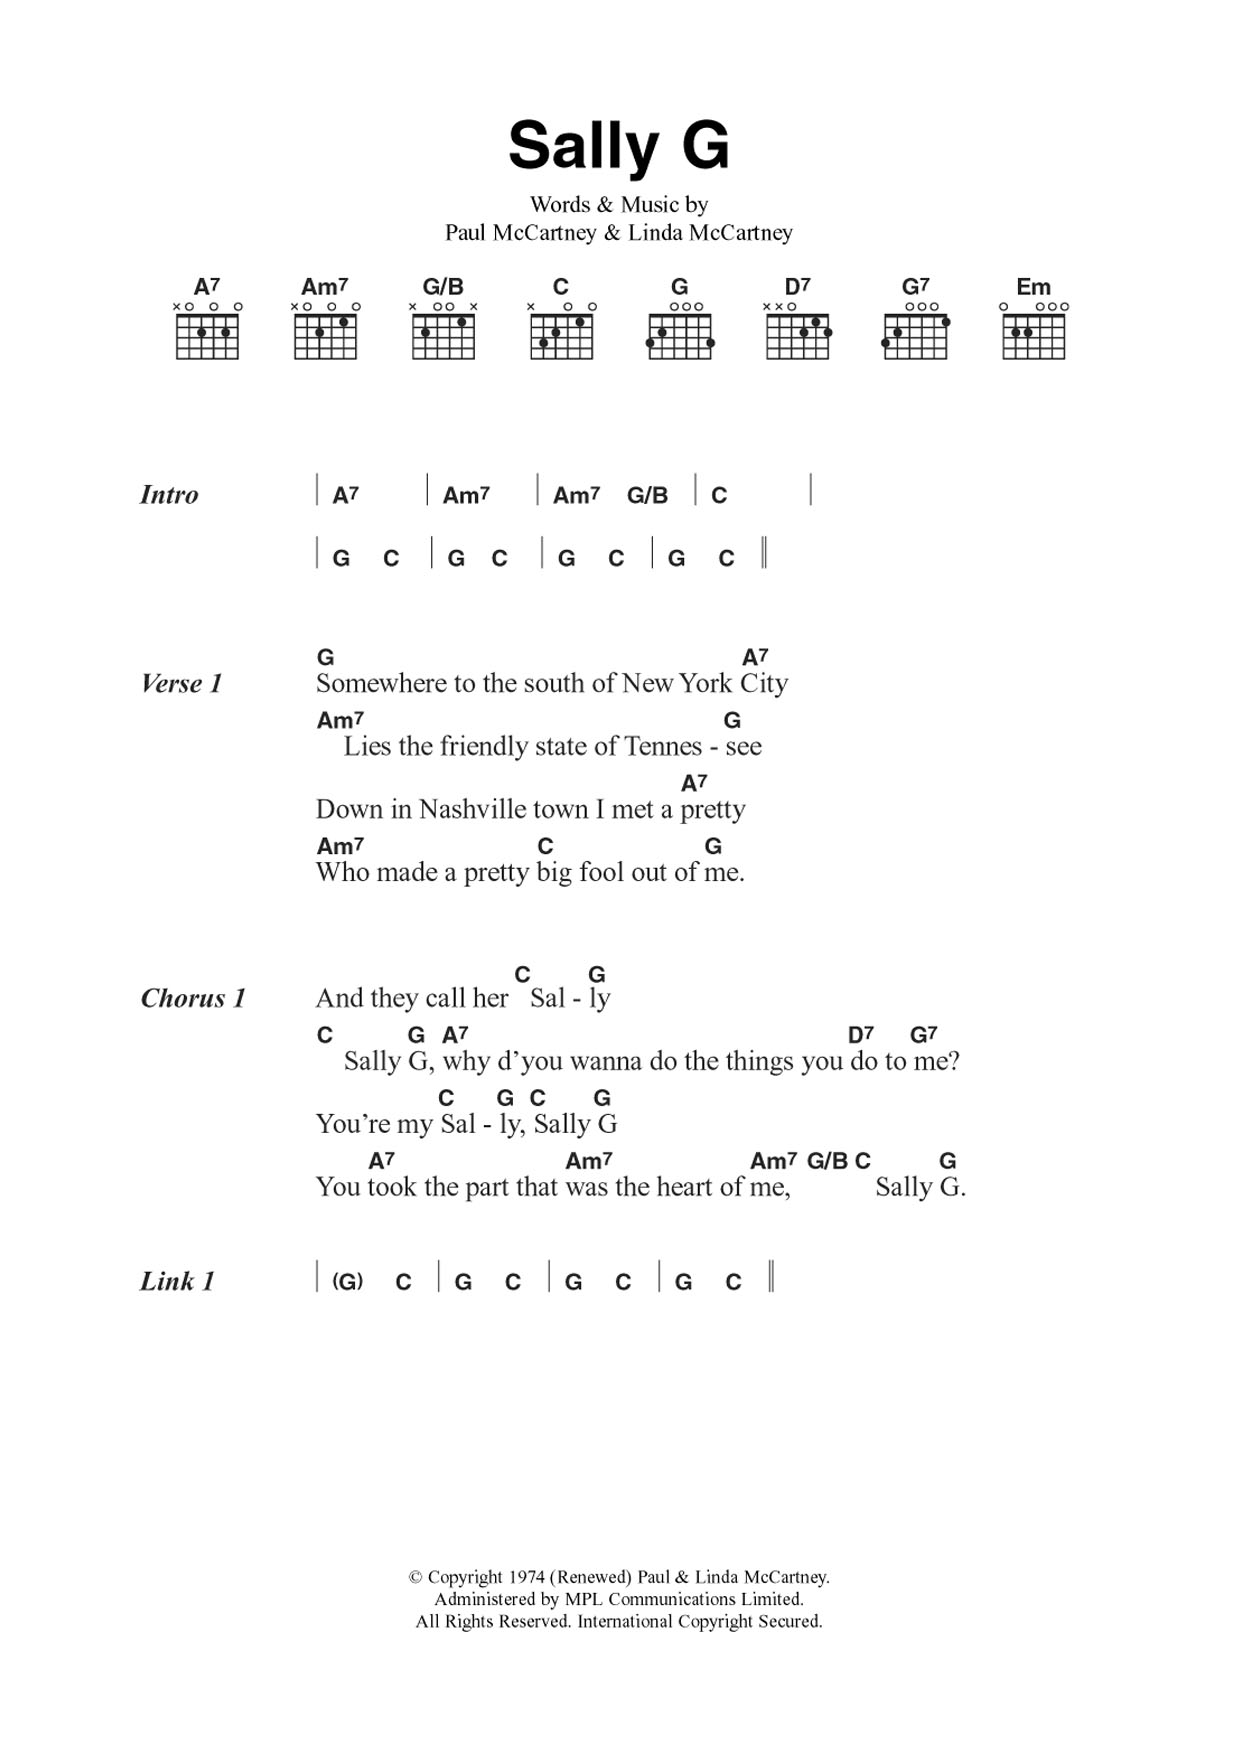 Wings Sally G Sheet Music Notes & Chords for Guitar Chords/Lyrics - Download or Print PDF